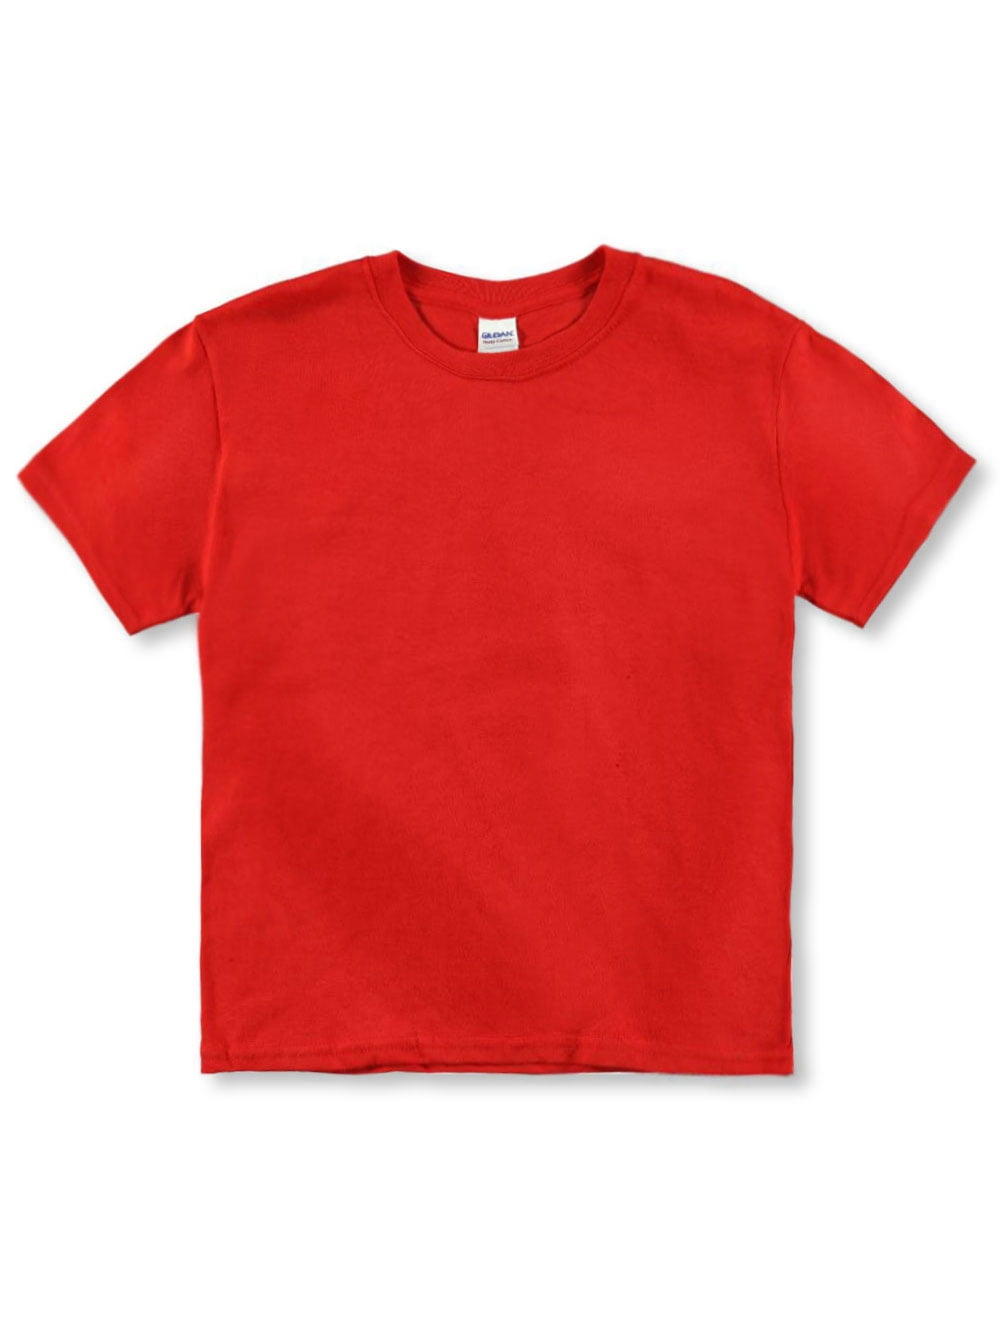 5 Pack Gildan Childrens T-Shirt Cotton Plain Boys Girls T Shirts White Black Red 